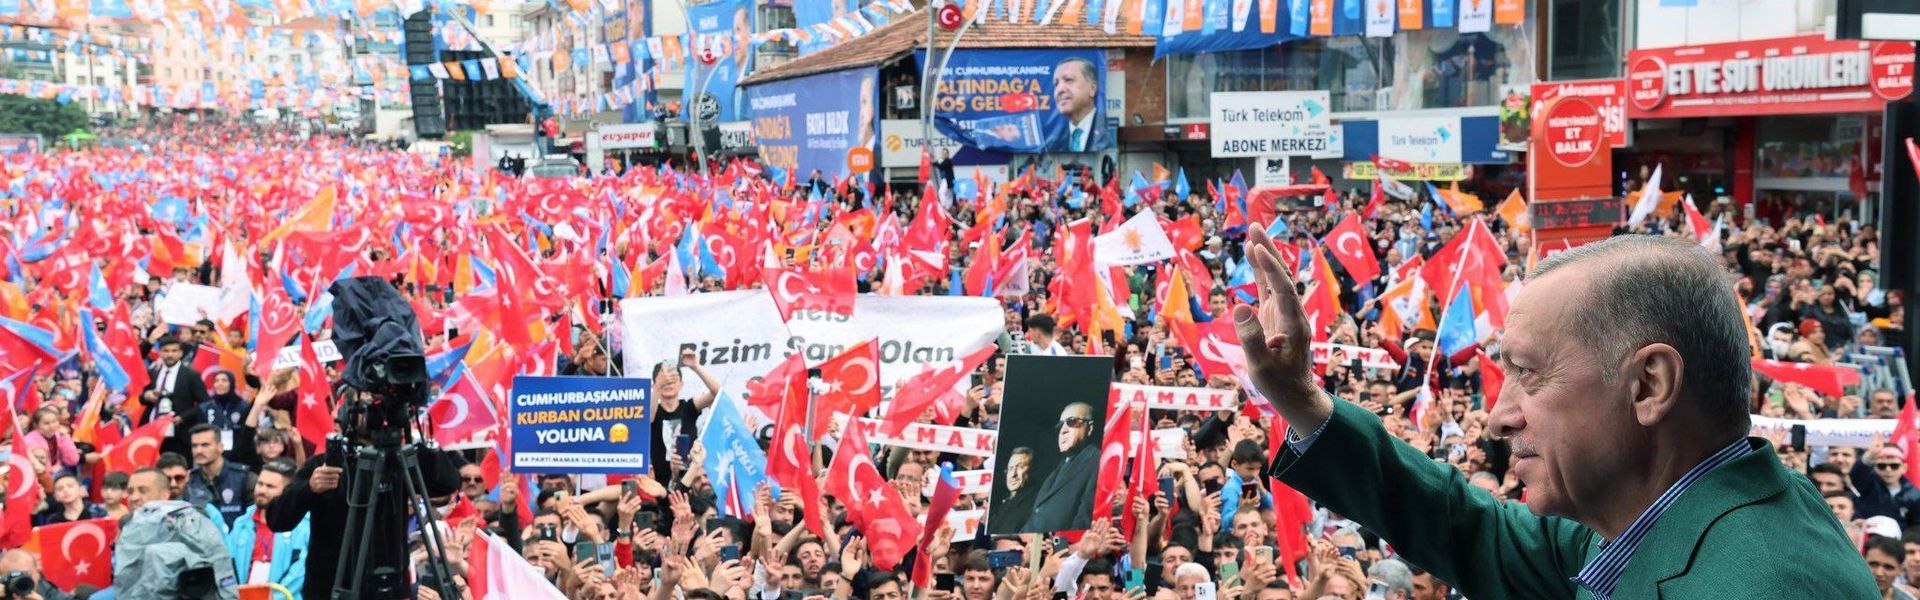 Turkish President Recep Tayyip Erdogan addresses the crowd during election rally in Ankara.